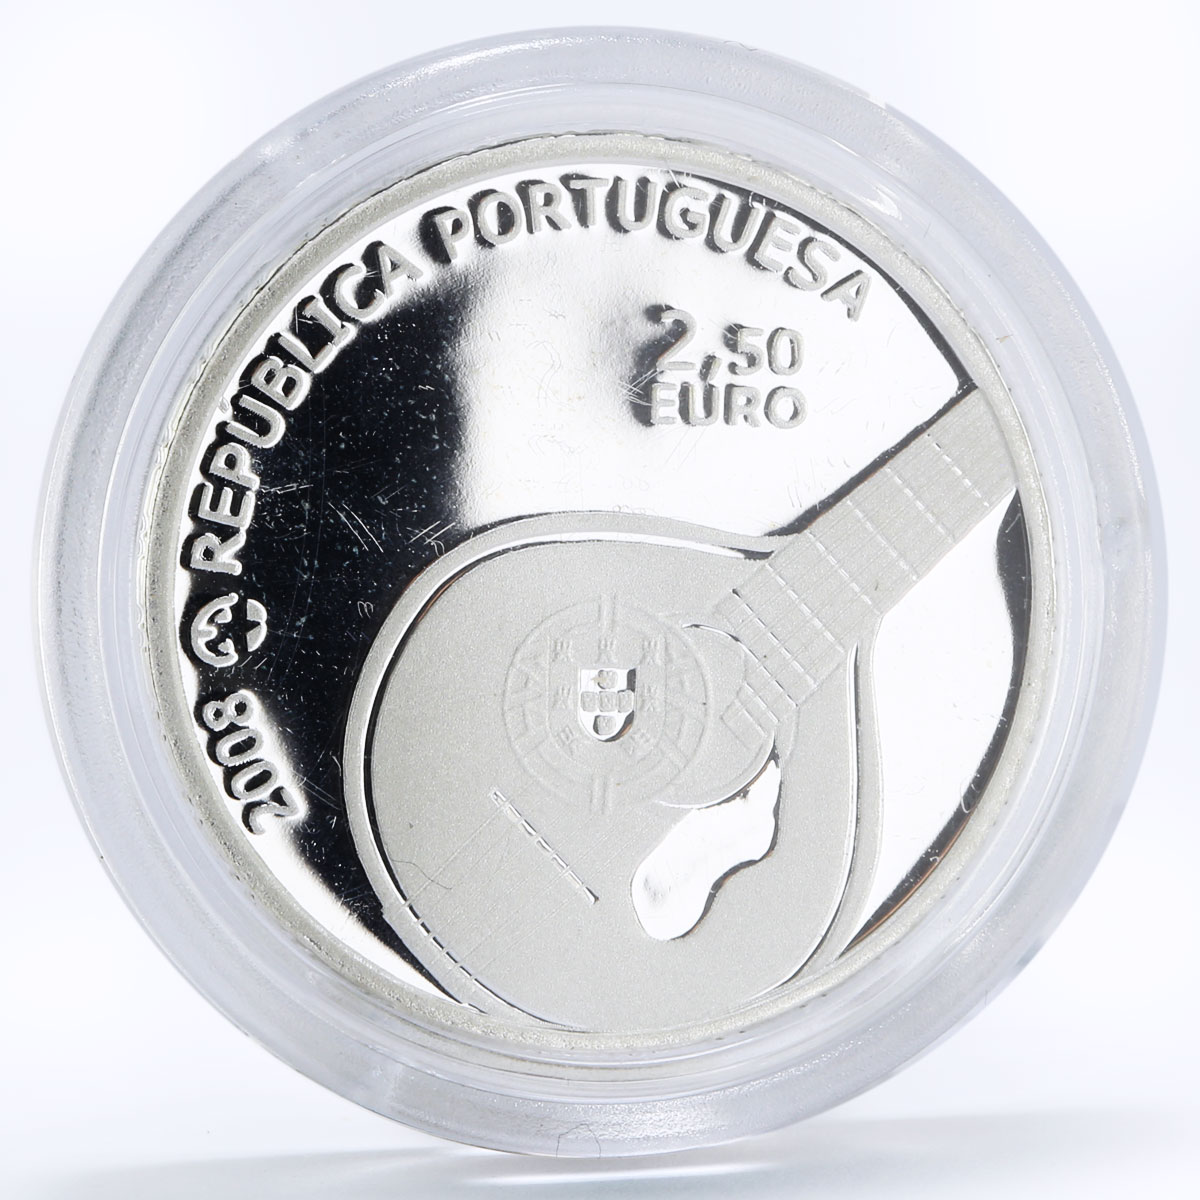 Portugal 2/5 euro European Culture series Fado Musician proof silver coin 2008